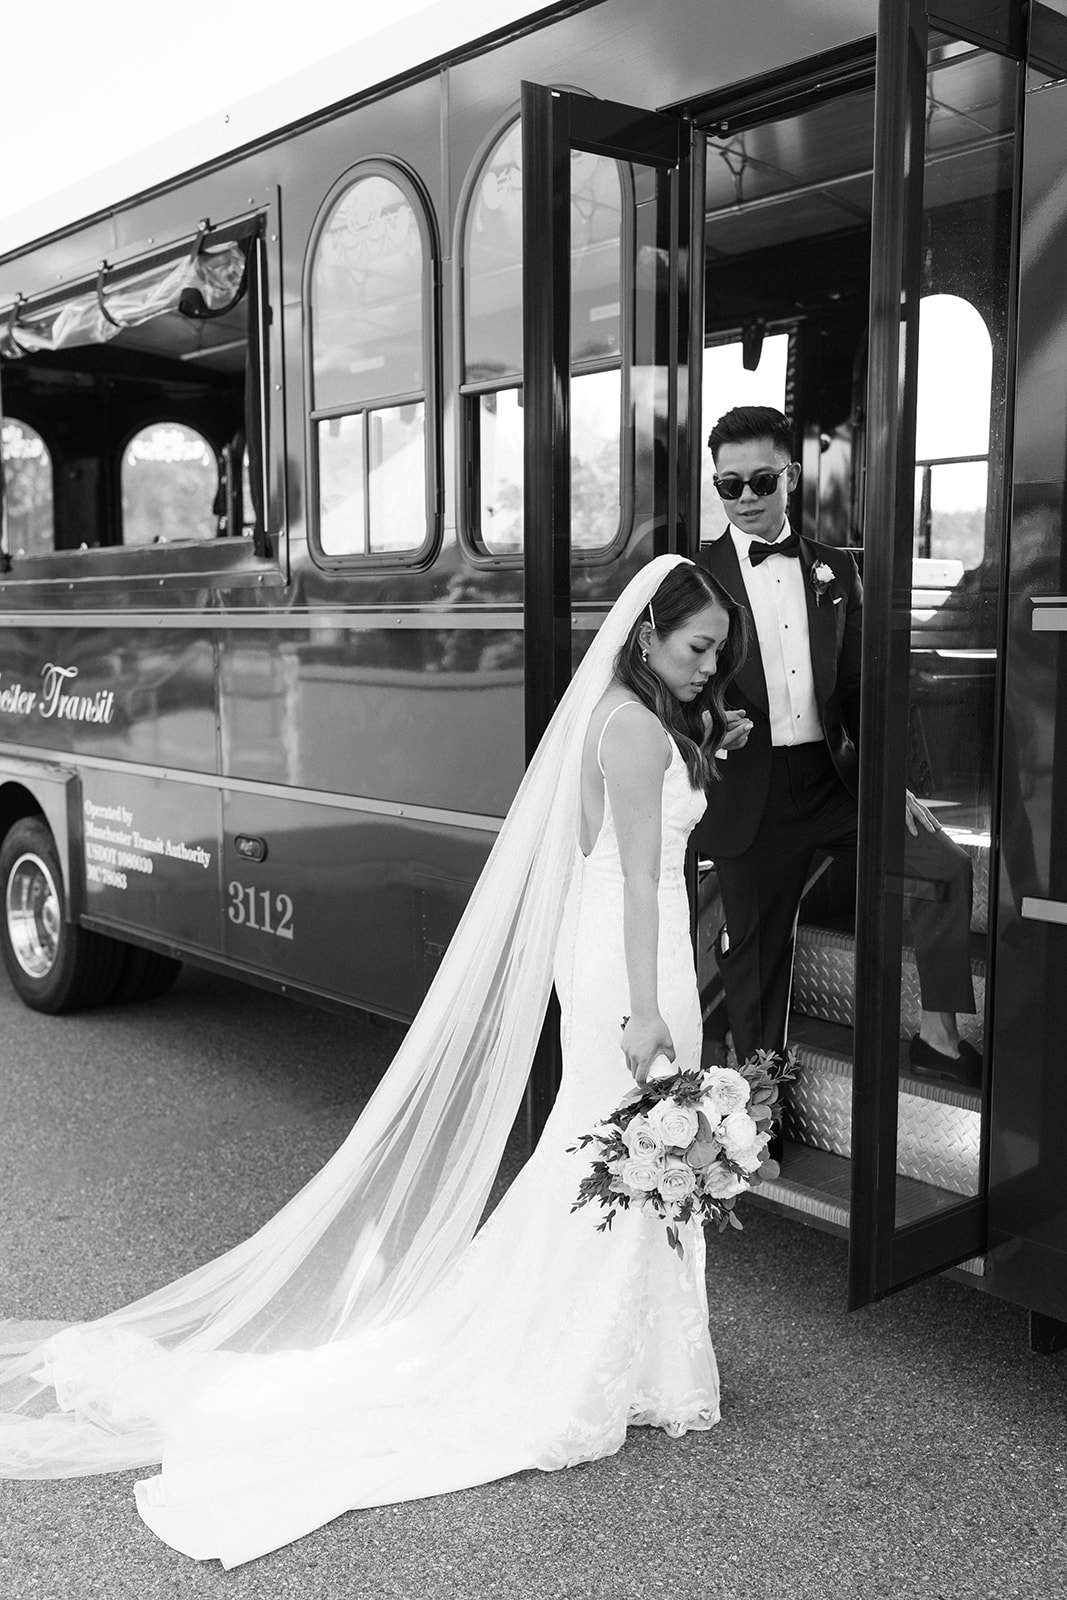 Stunning bride and groom enter their trolley during their dreamy Boston wedding day